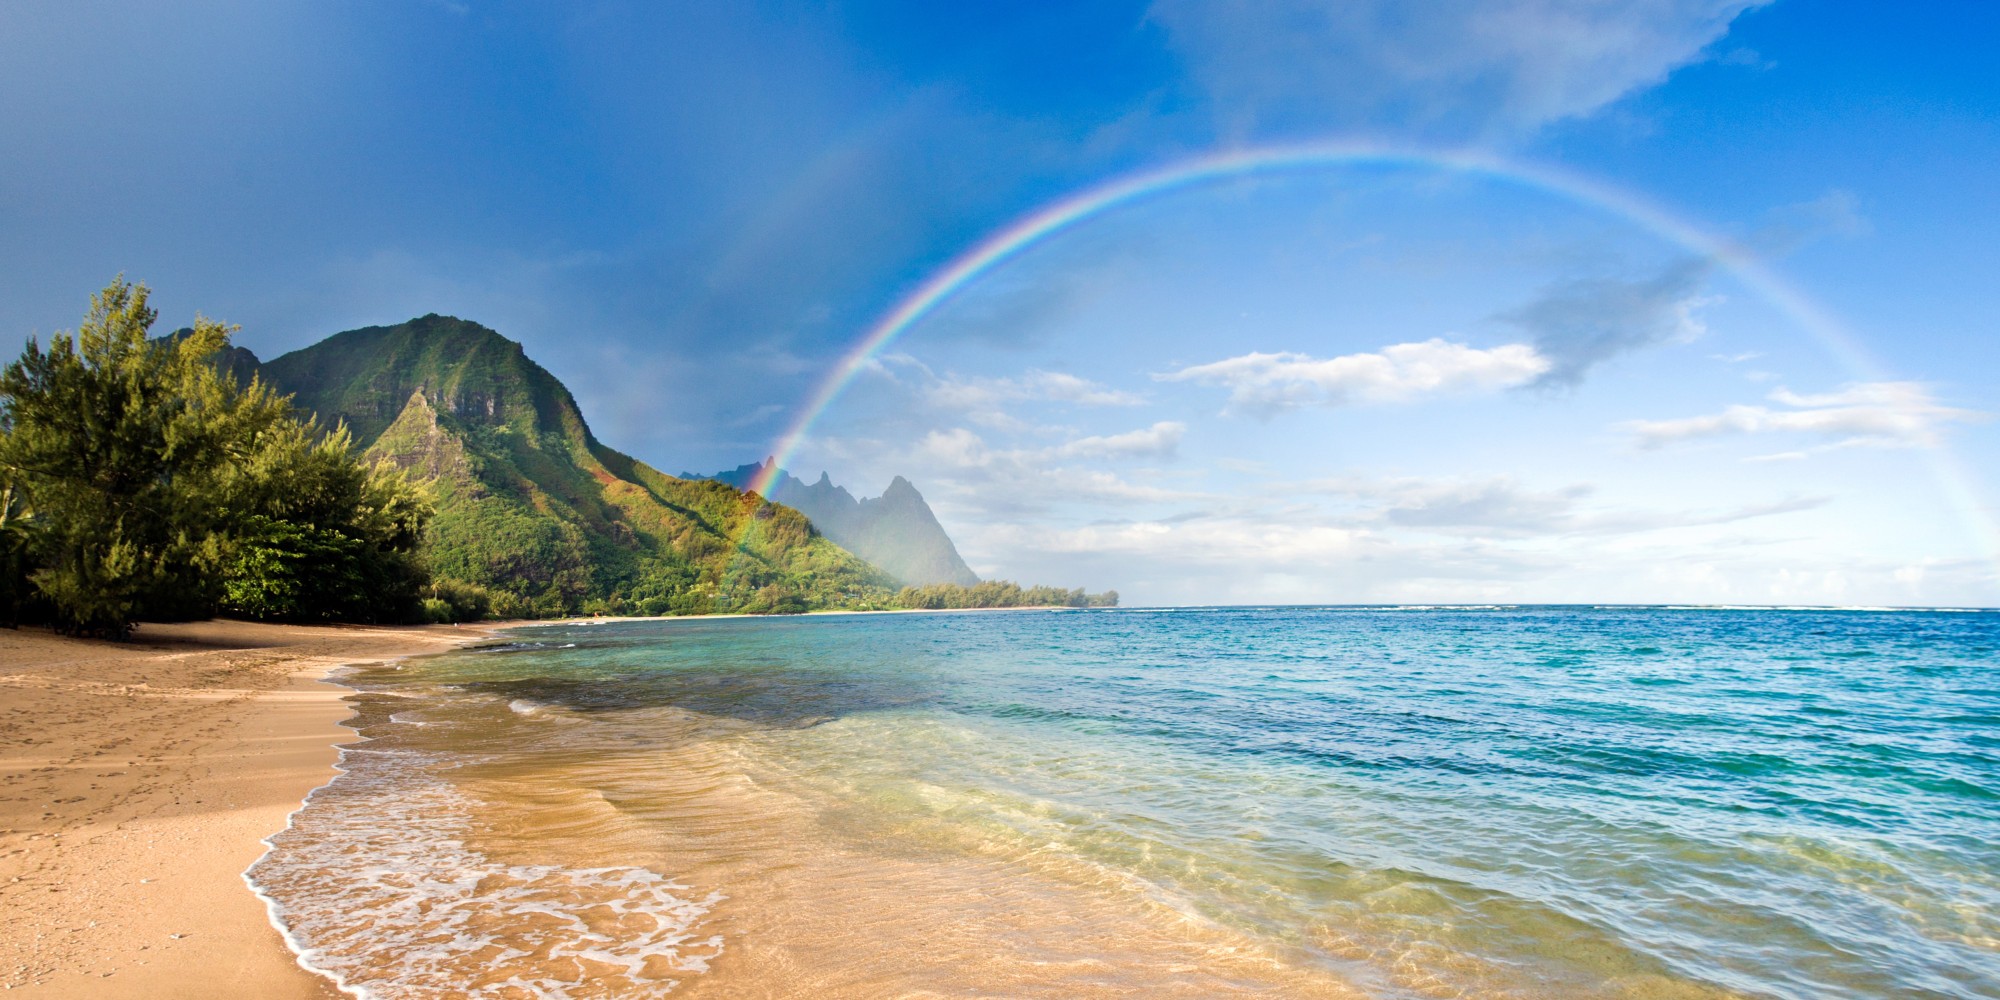 General 2000x1000 beach rainbows sea mountains trees sand Hawaii island clouds nature landscape USA